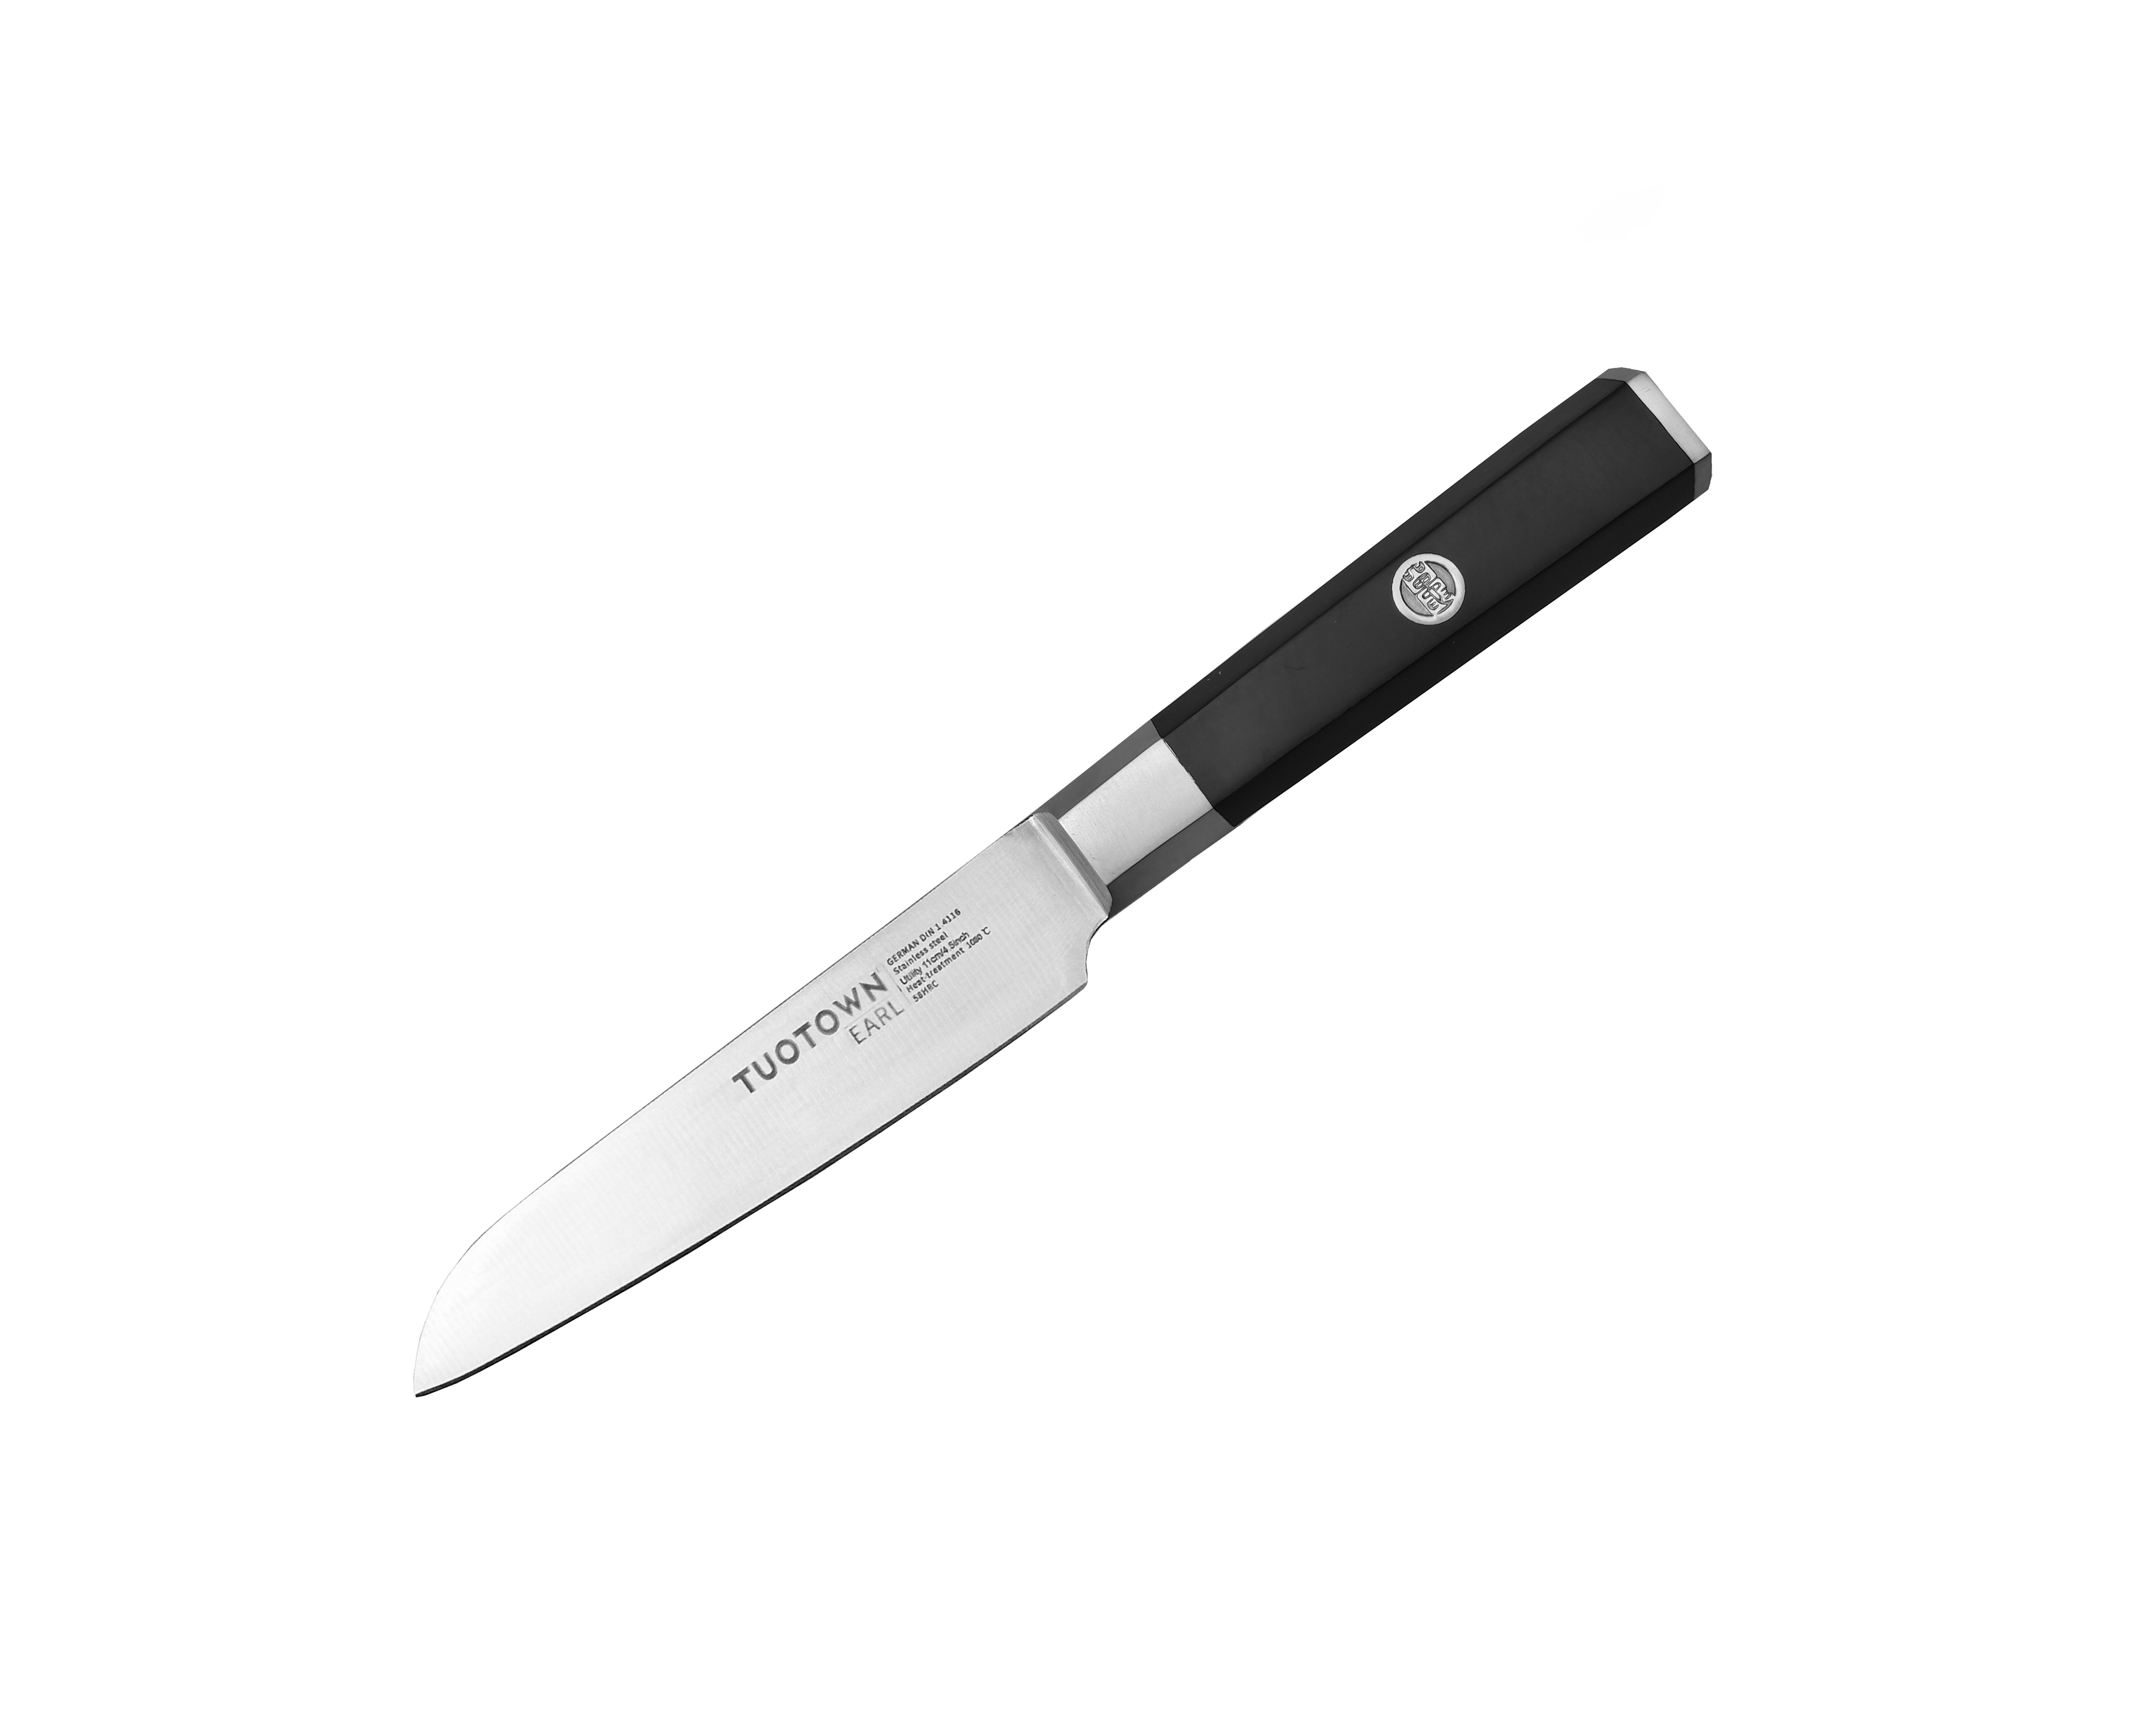 Кухонный нож Универсальный серии Earl, TUOTOWN, Earl-ABS  - Купить